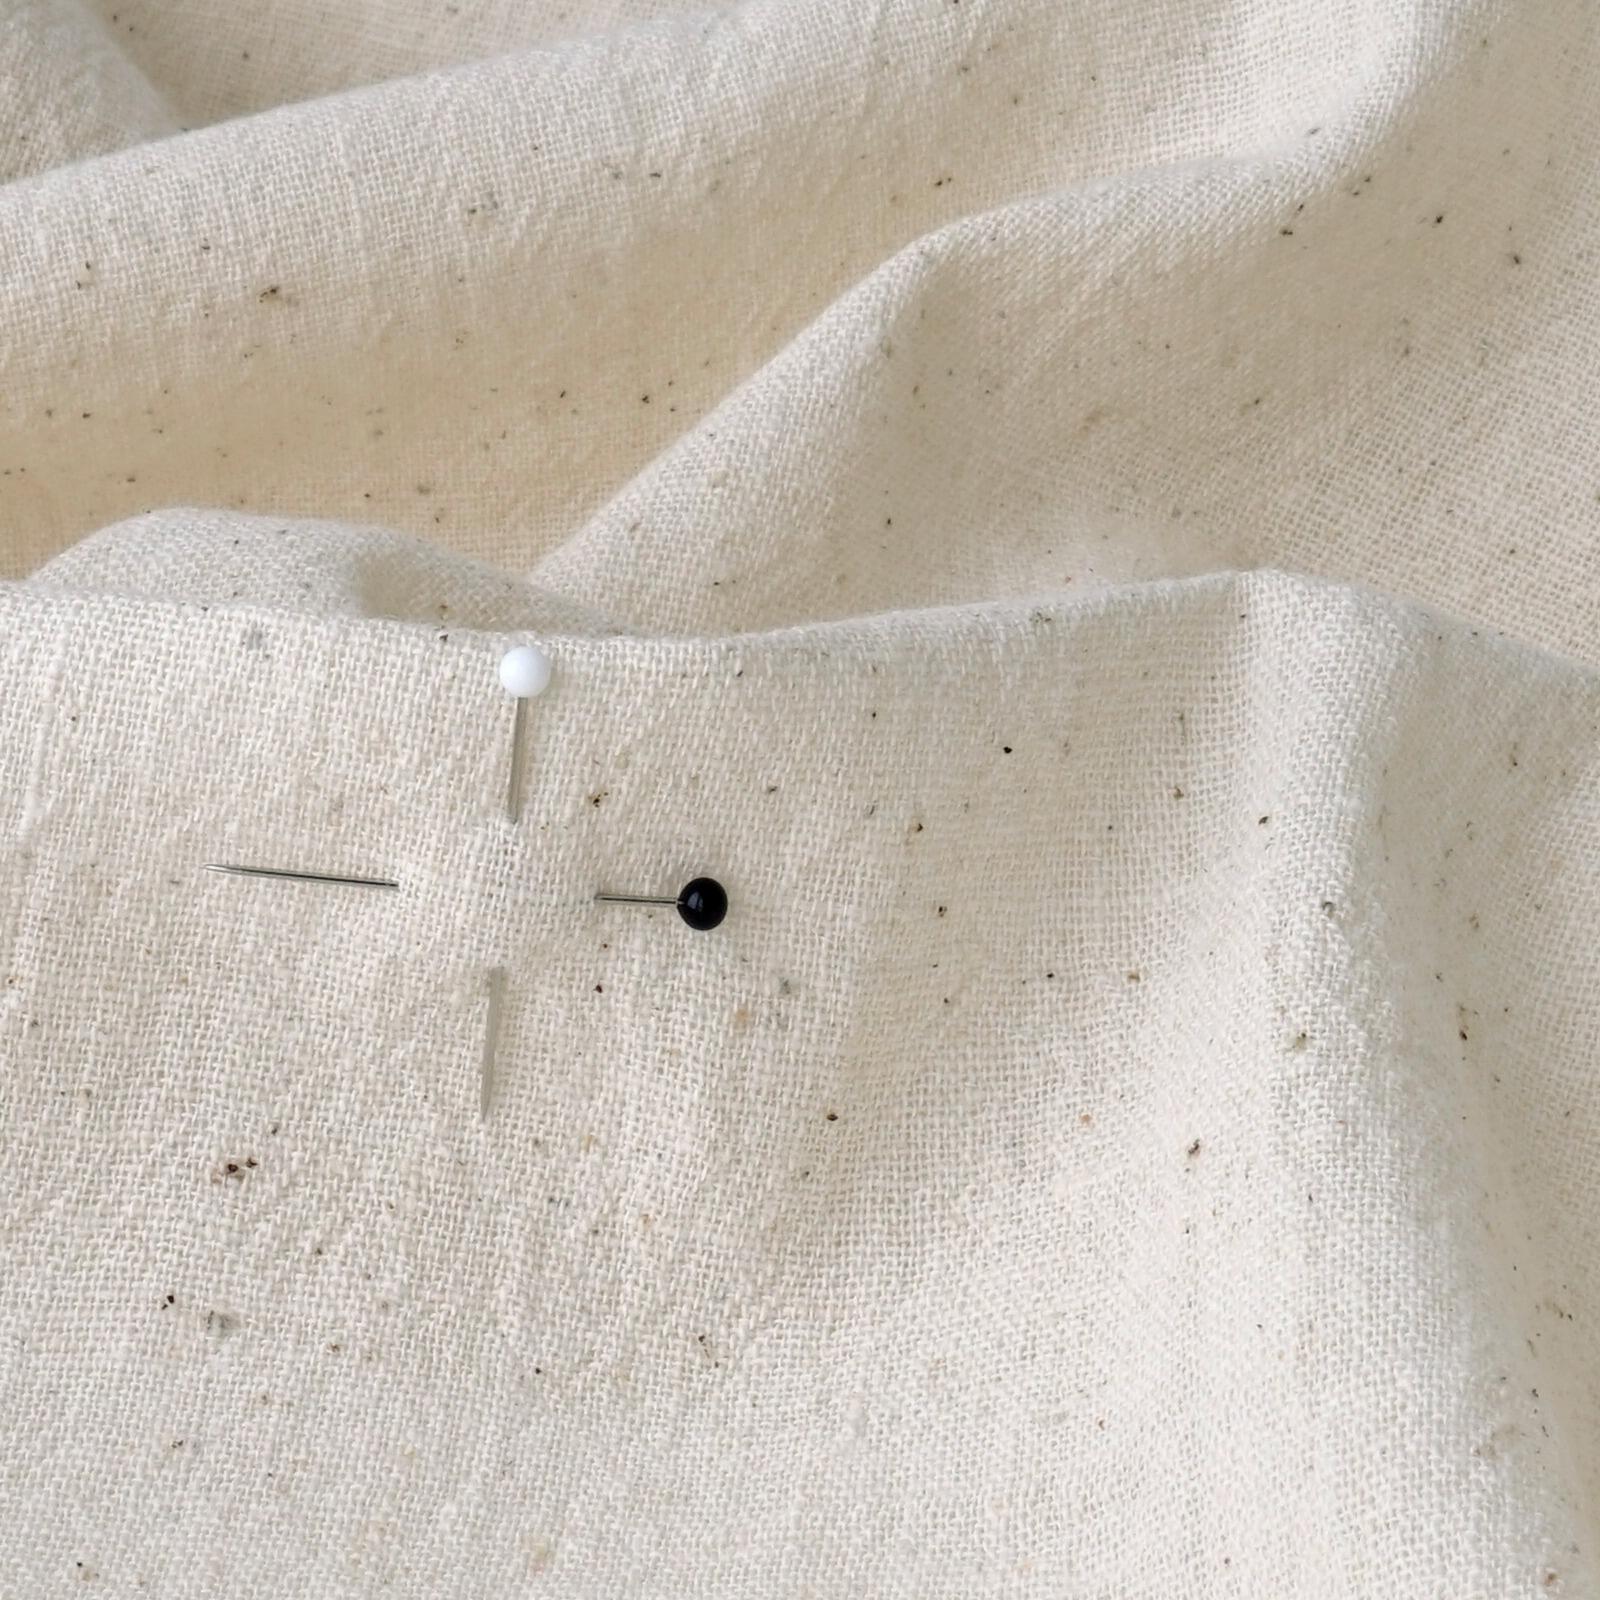 Organic Kala Cotton - Handloom Woven - Plain Weave - 1 by 1 - Unbleached - Undyed - Close Up